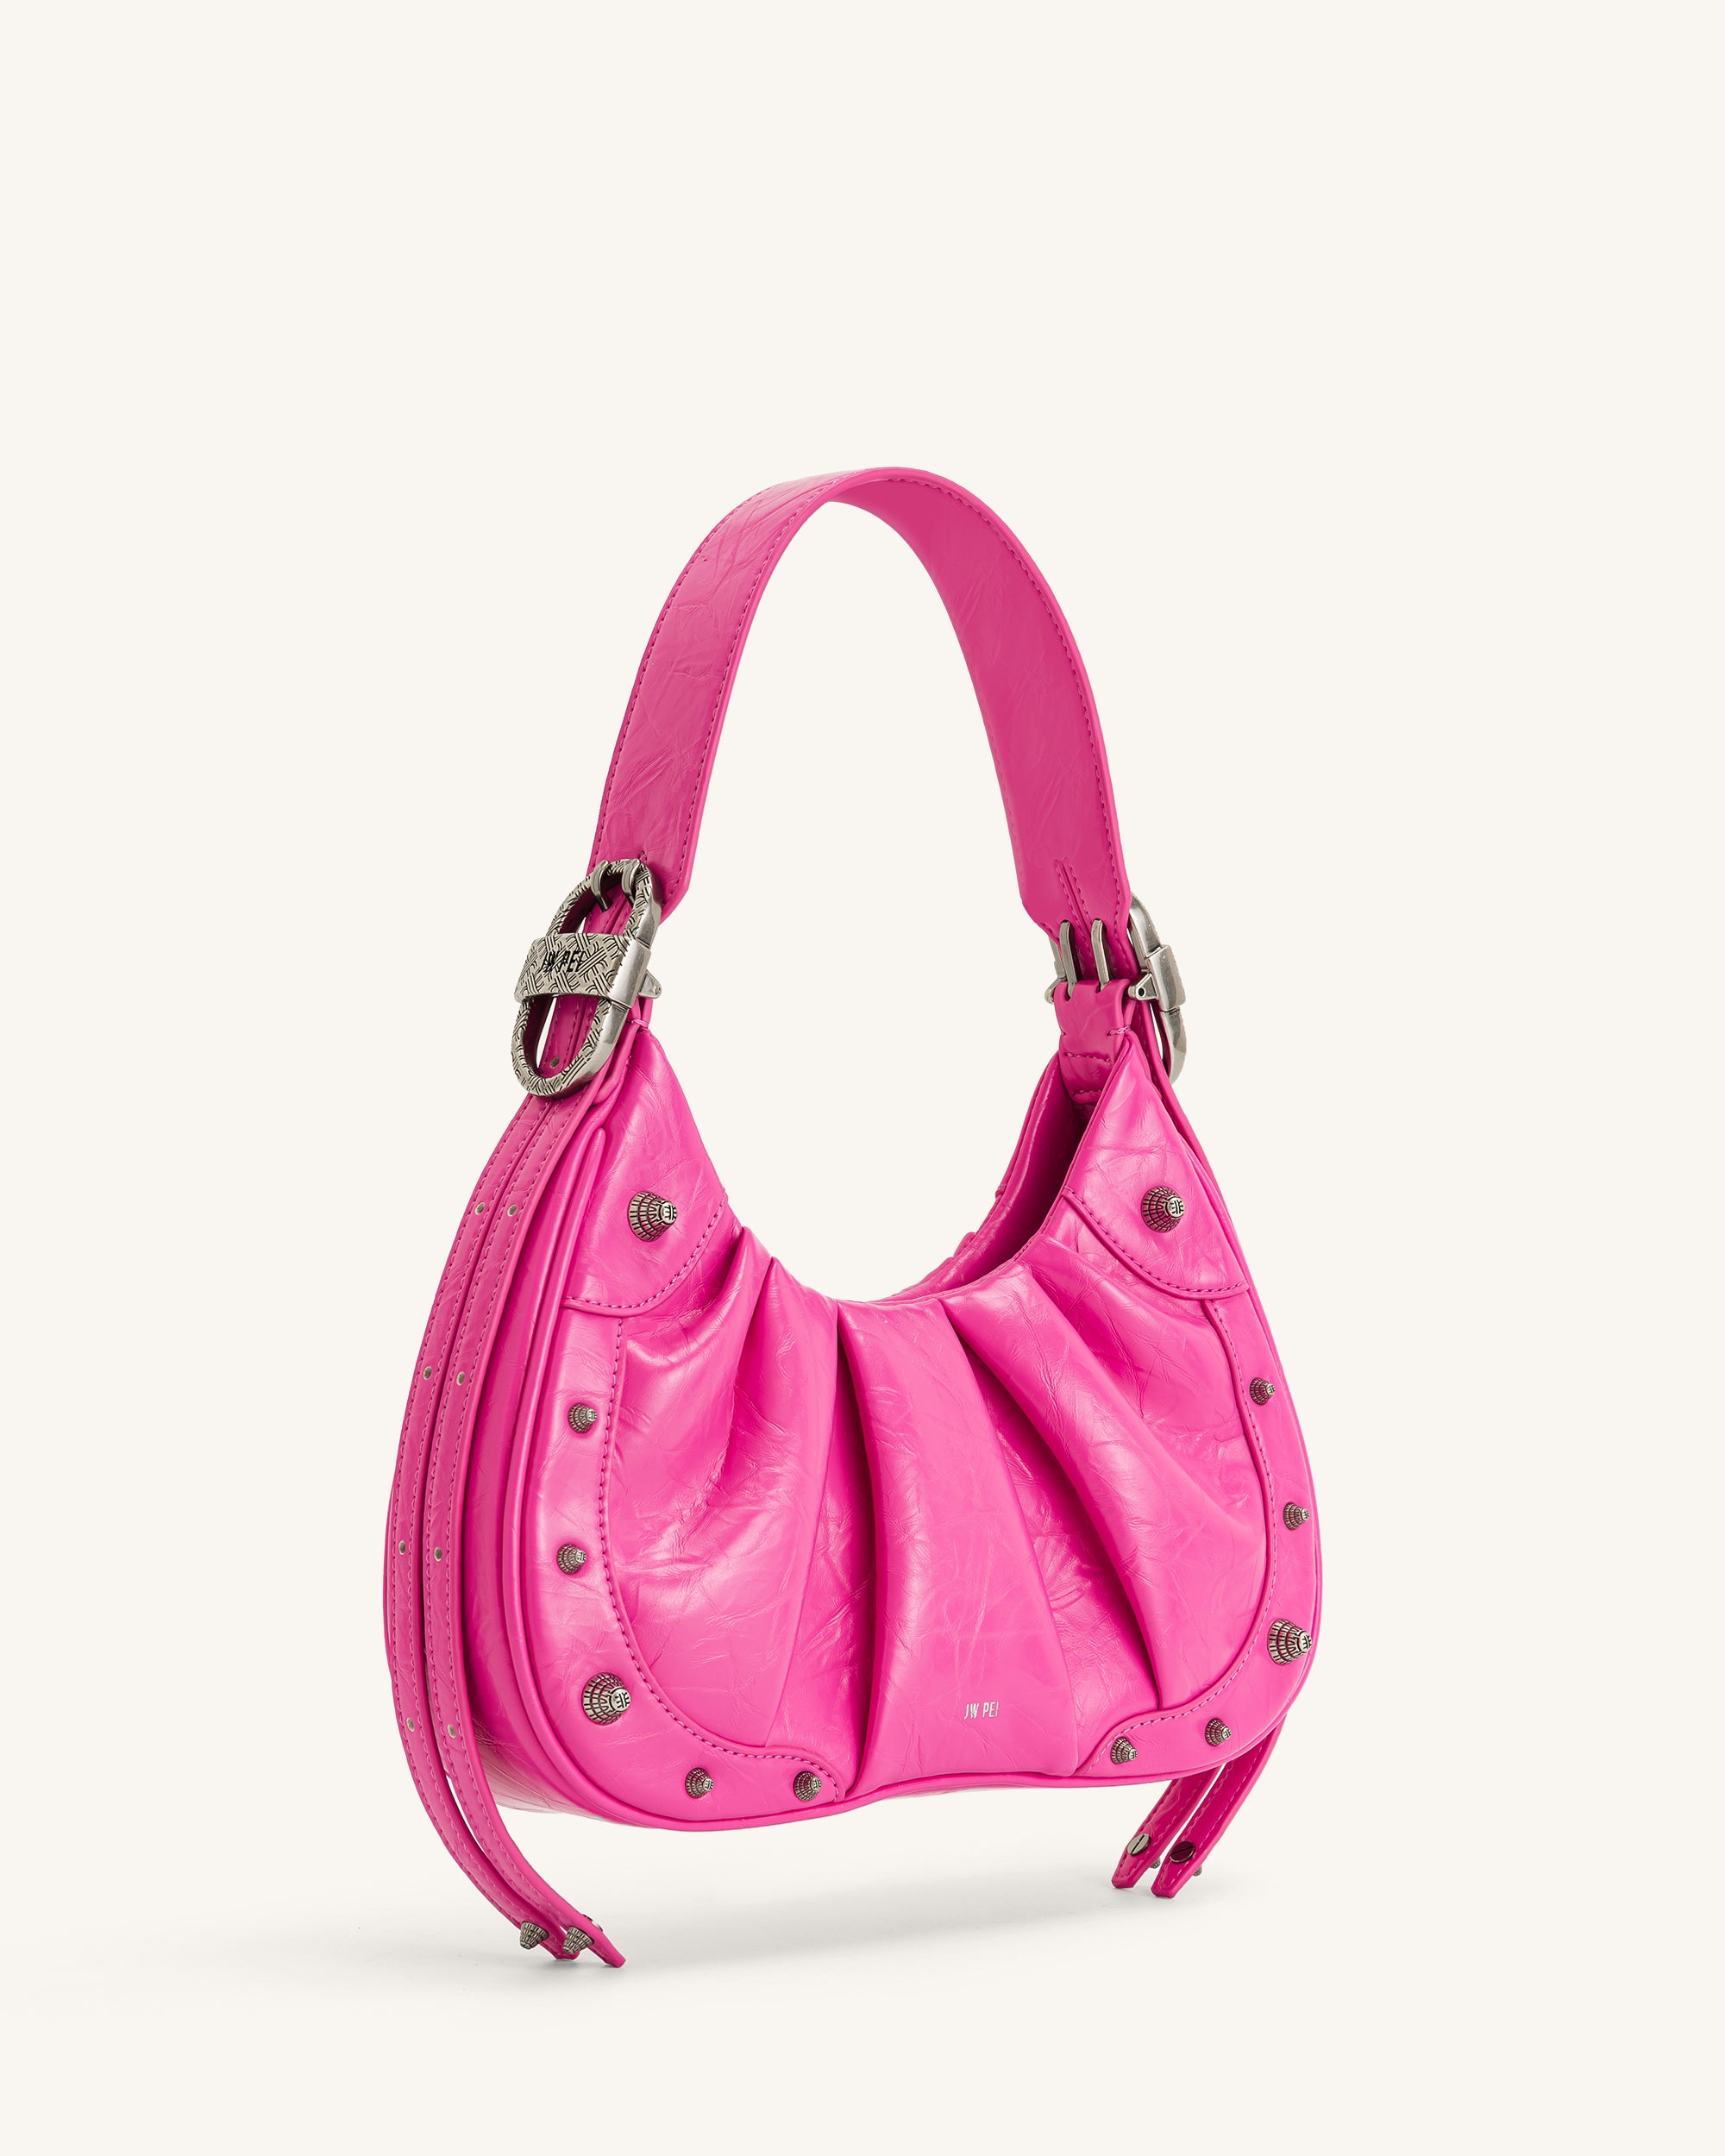 Gabbi Crushed Ruched Hobo Handbag - Bright Pink - JW PEI